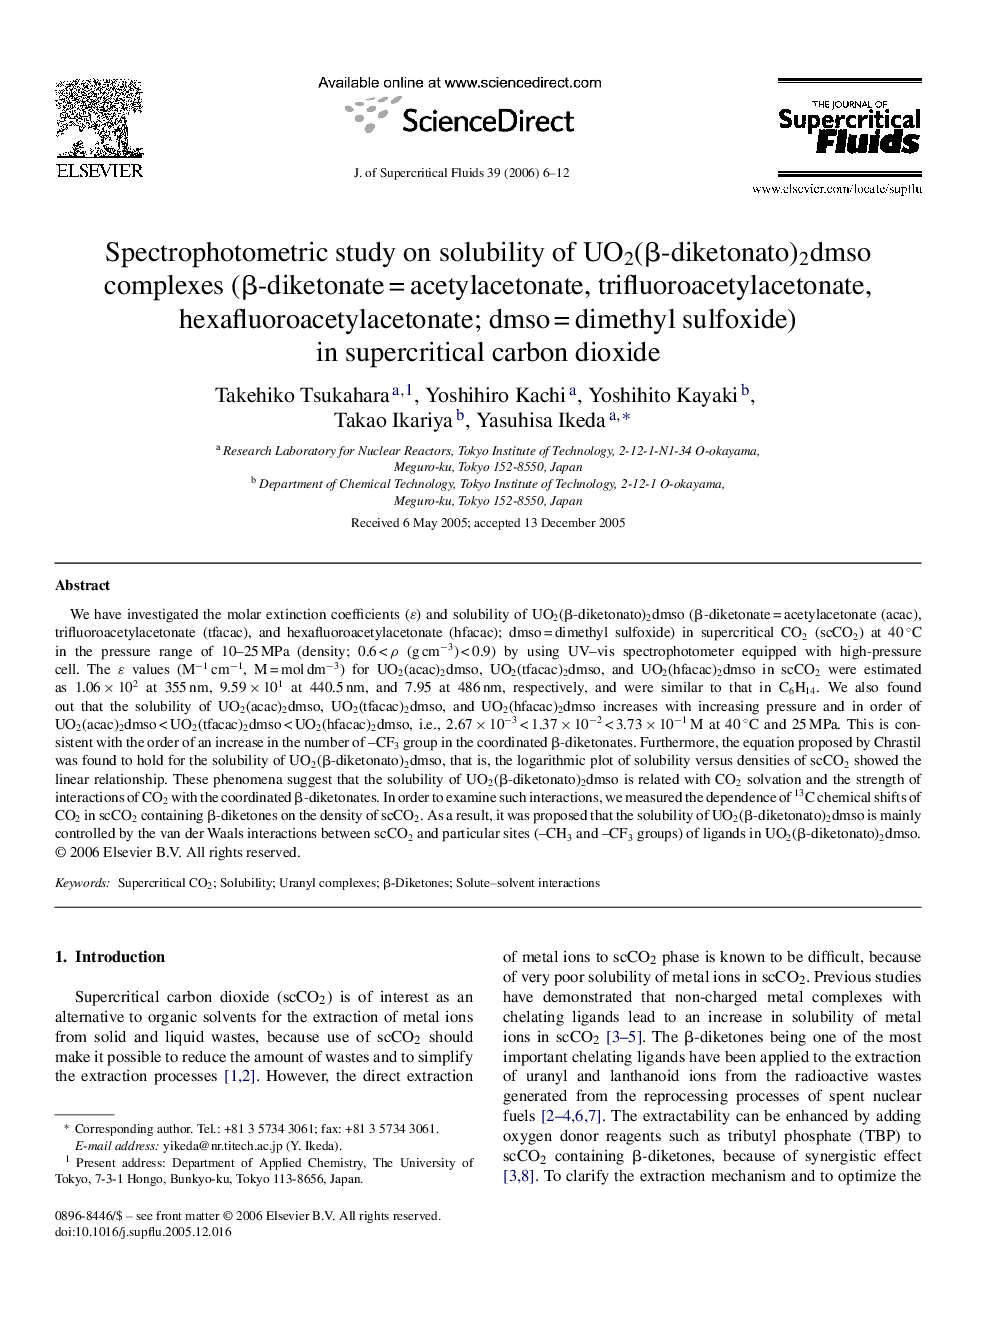 Spectrophotometric study on solubility of UO2(β-diketonato)2dmso complexes (β-diketonate = acetylacetonate, trifluoroacetylacetonate, hexafluoroacetylacetonate; dmso = dimethyl sulfoxide) in supercritical carbon dioxide